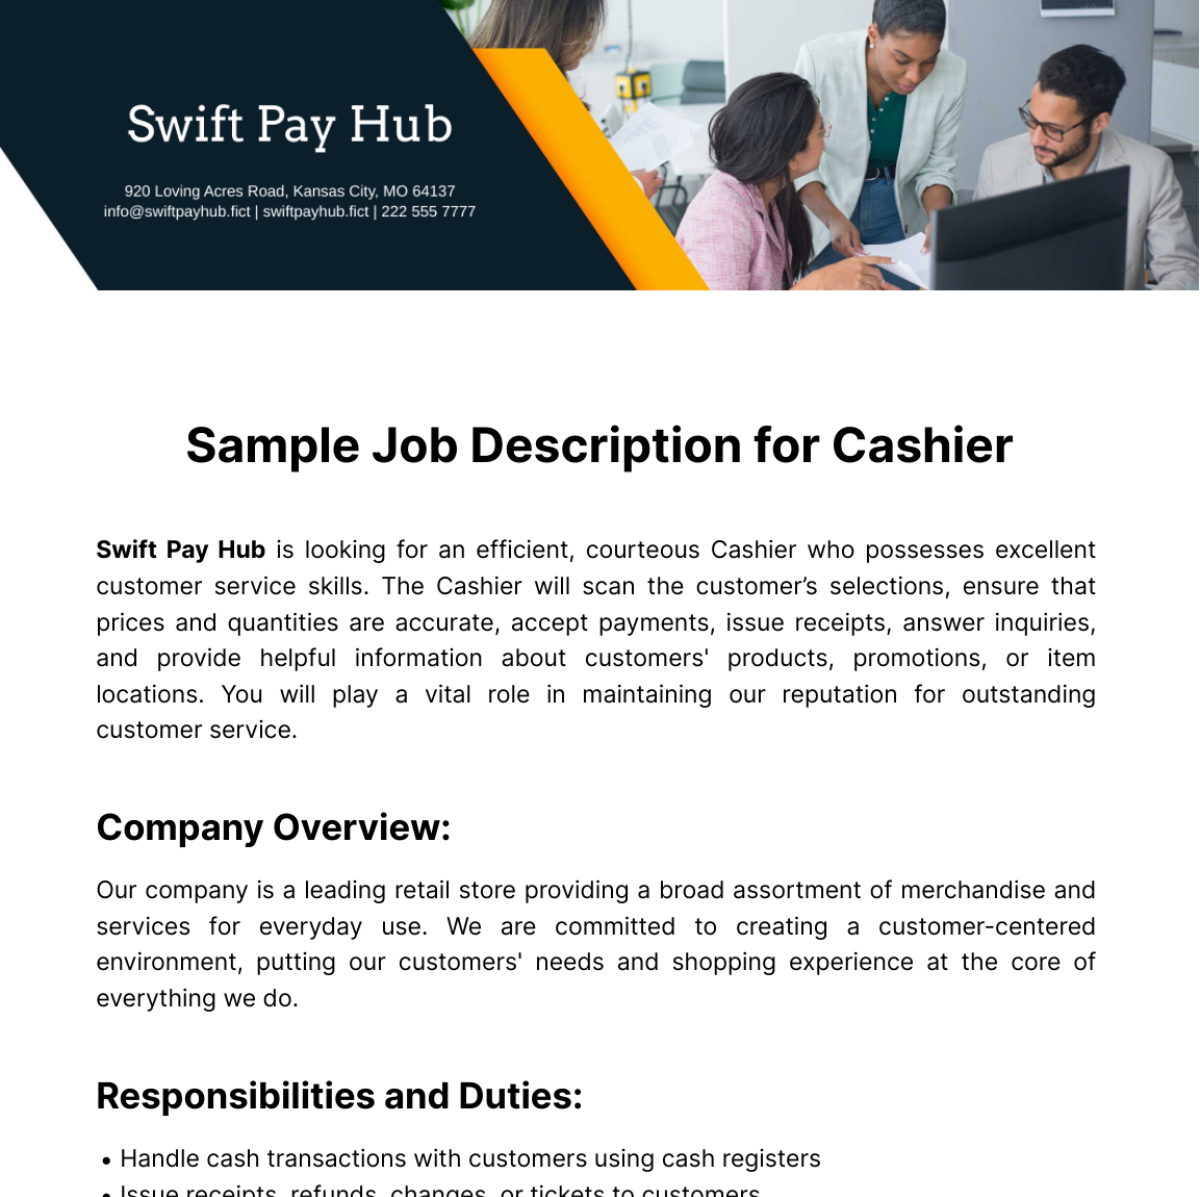 Sample Job Description for Cashier Template